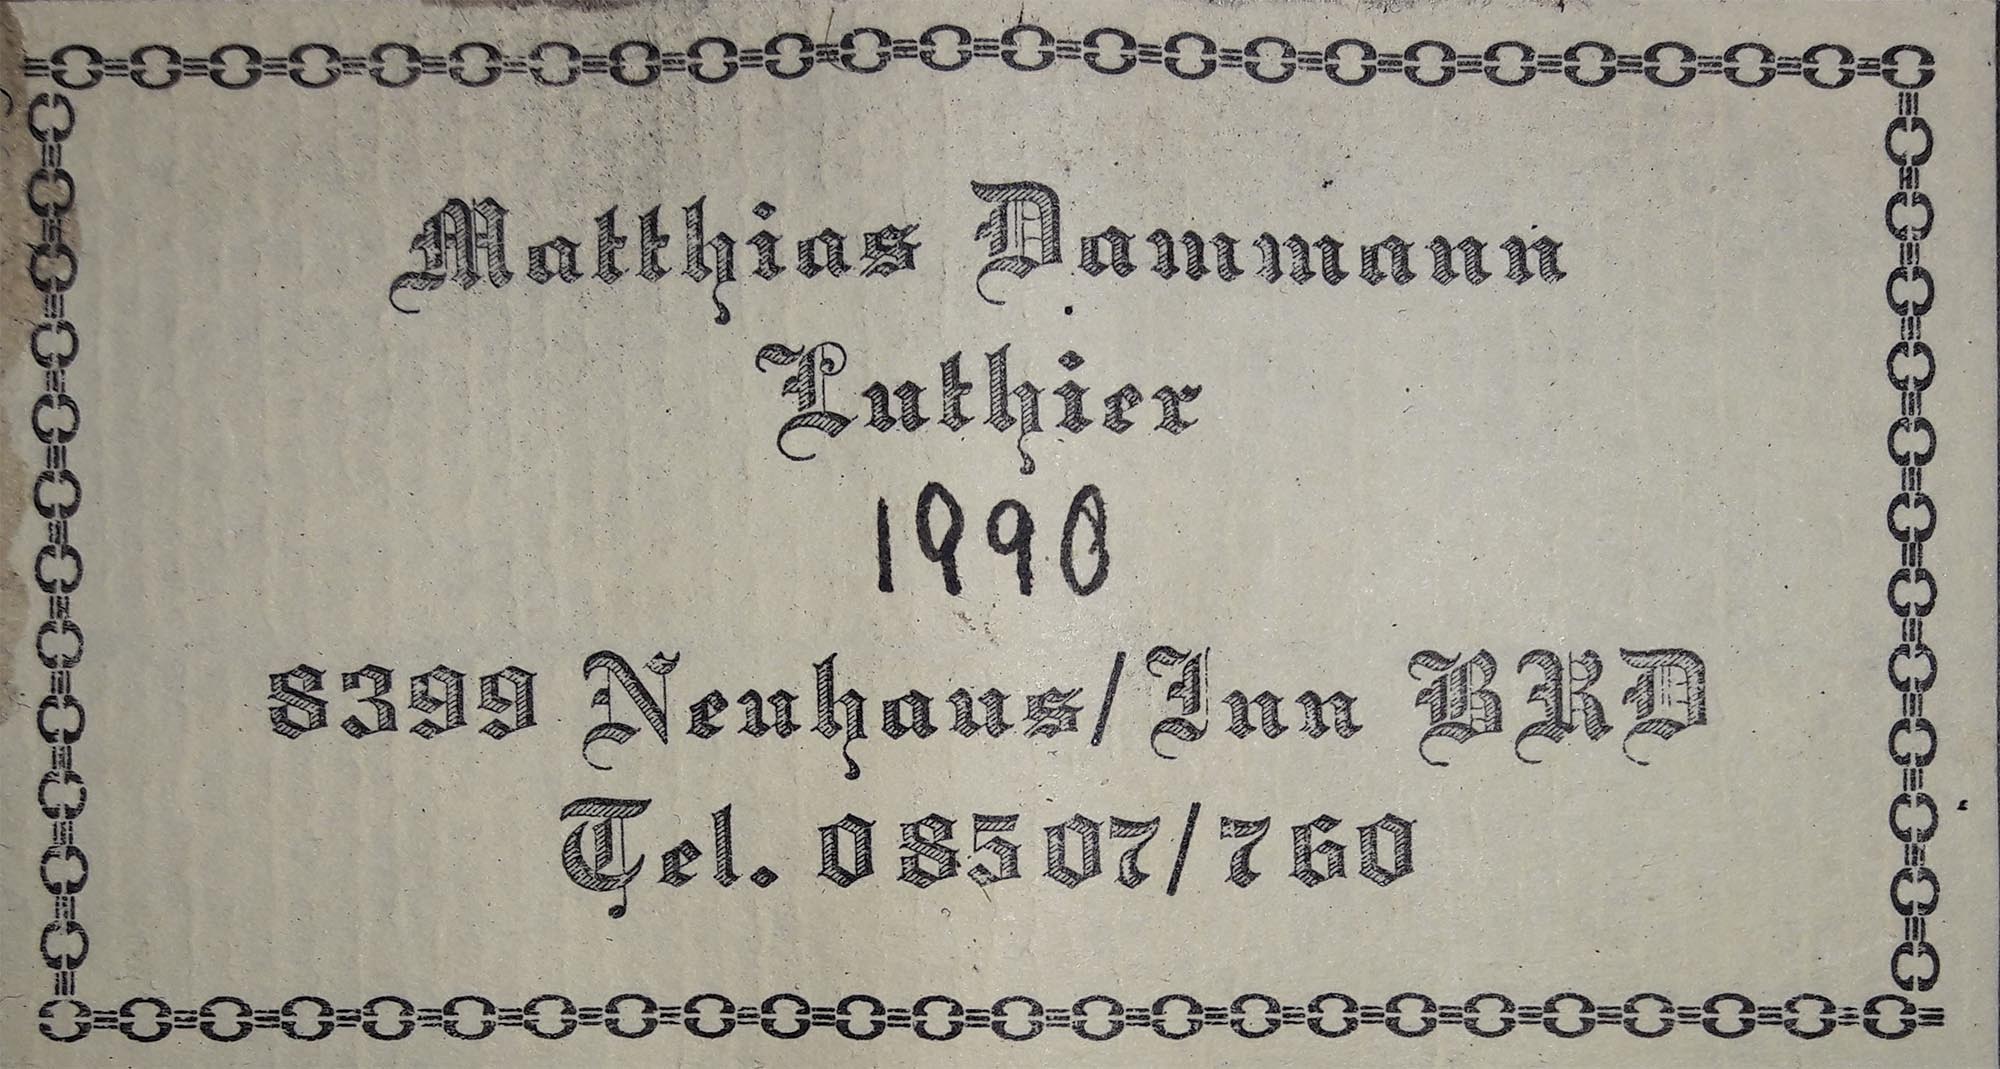 a matthias dammann 1990 16012018 21